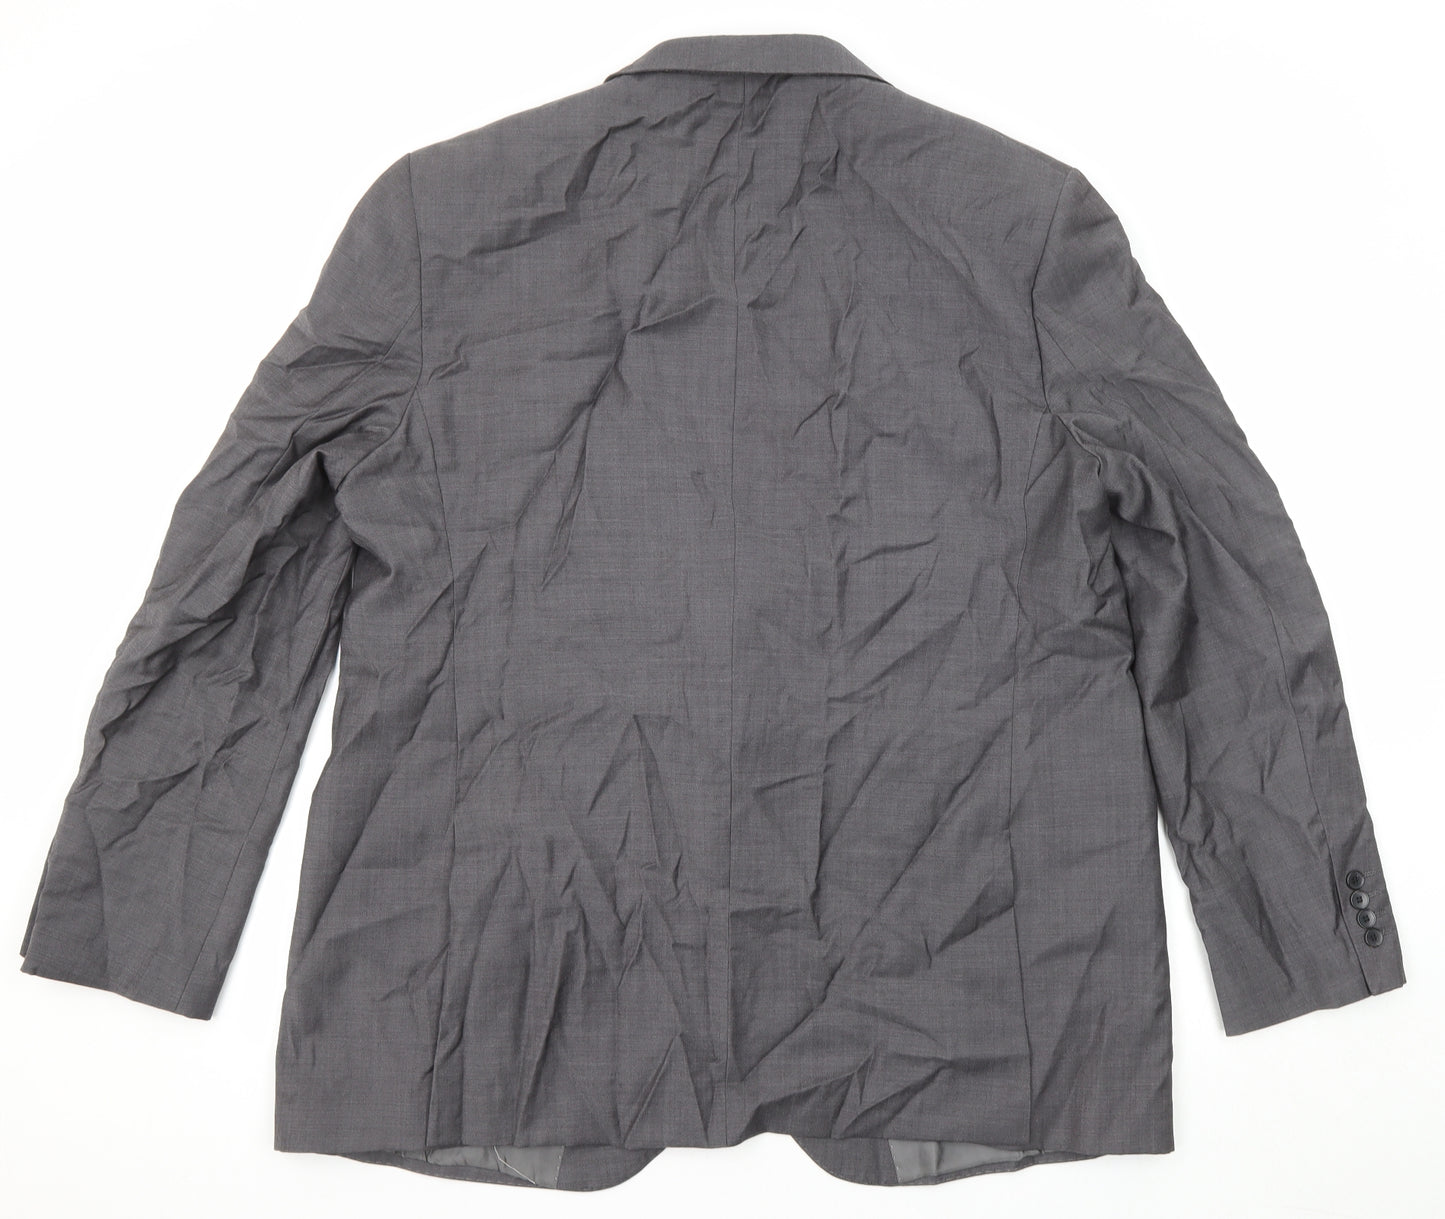 Autograph Mens Grey Polyester Jacket Suit Jacket Size 46 Regular